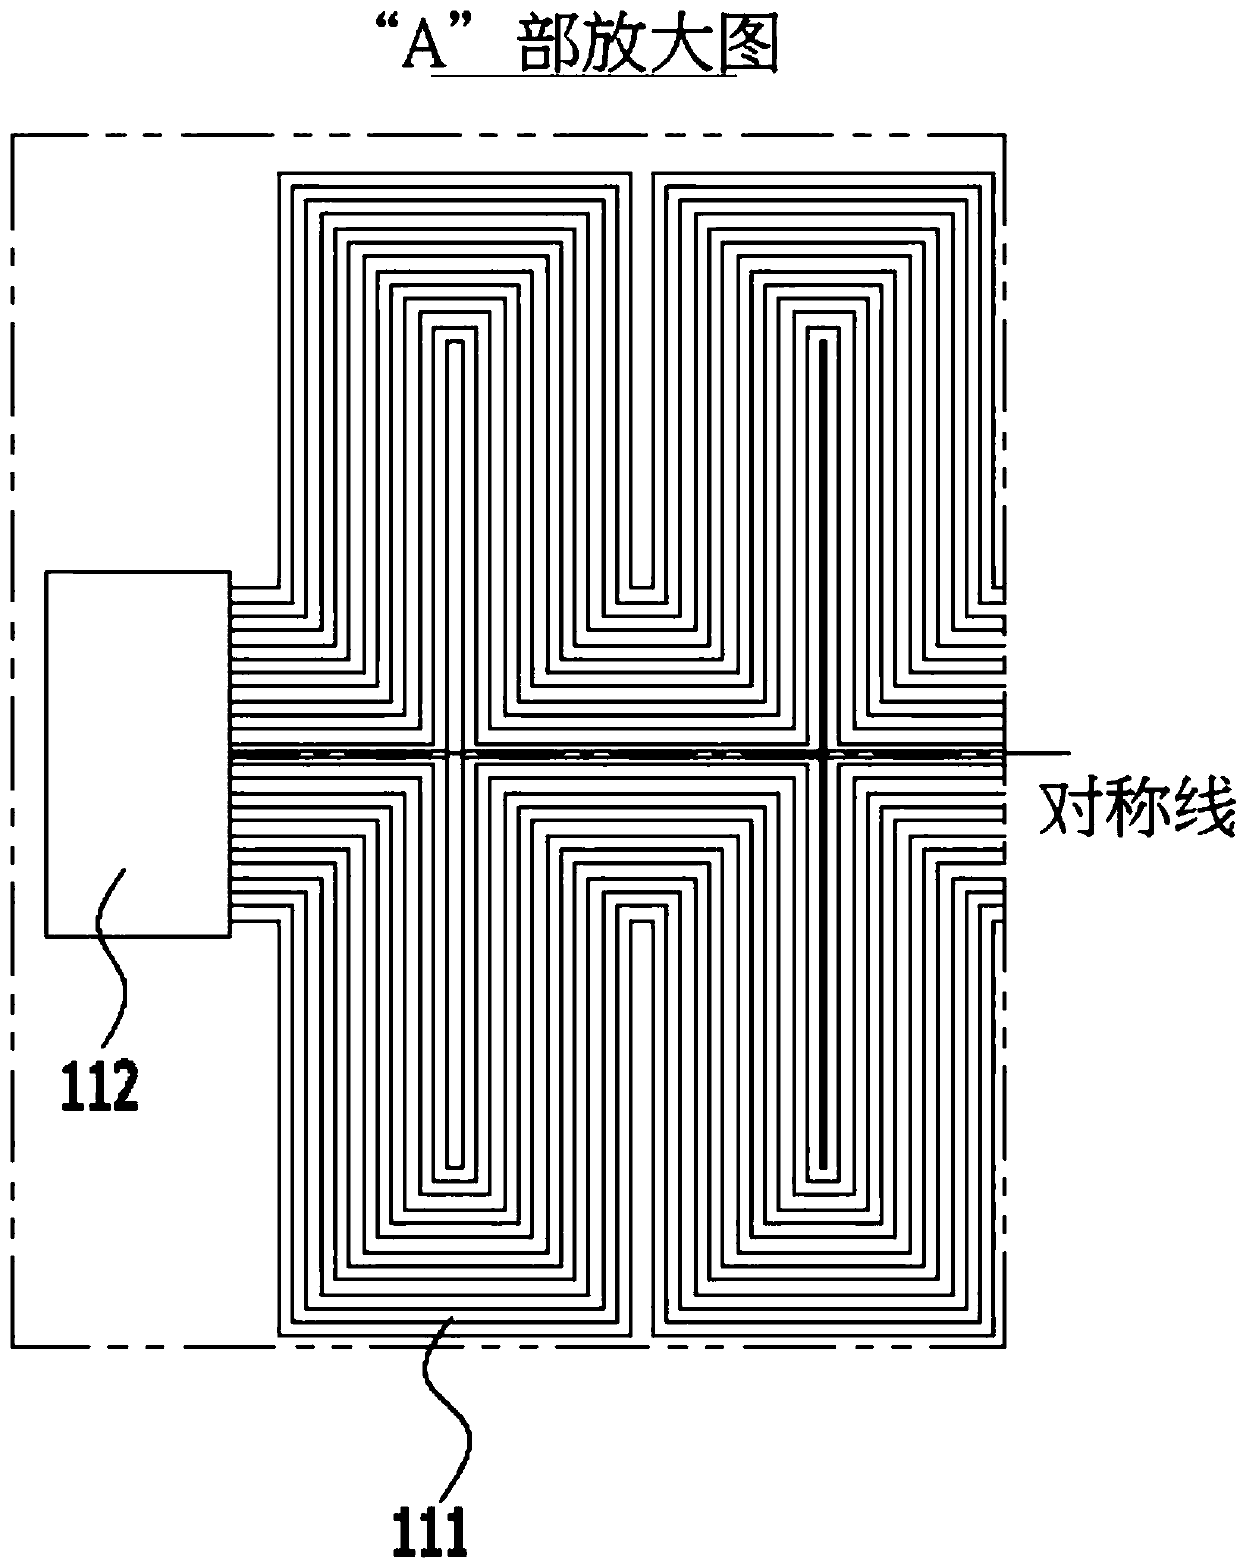 Printed circuit-type heat exchanger having integral structure